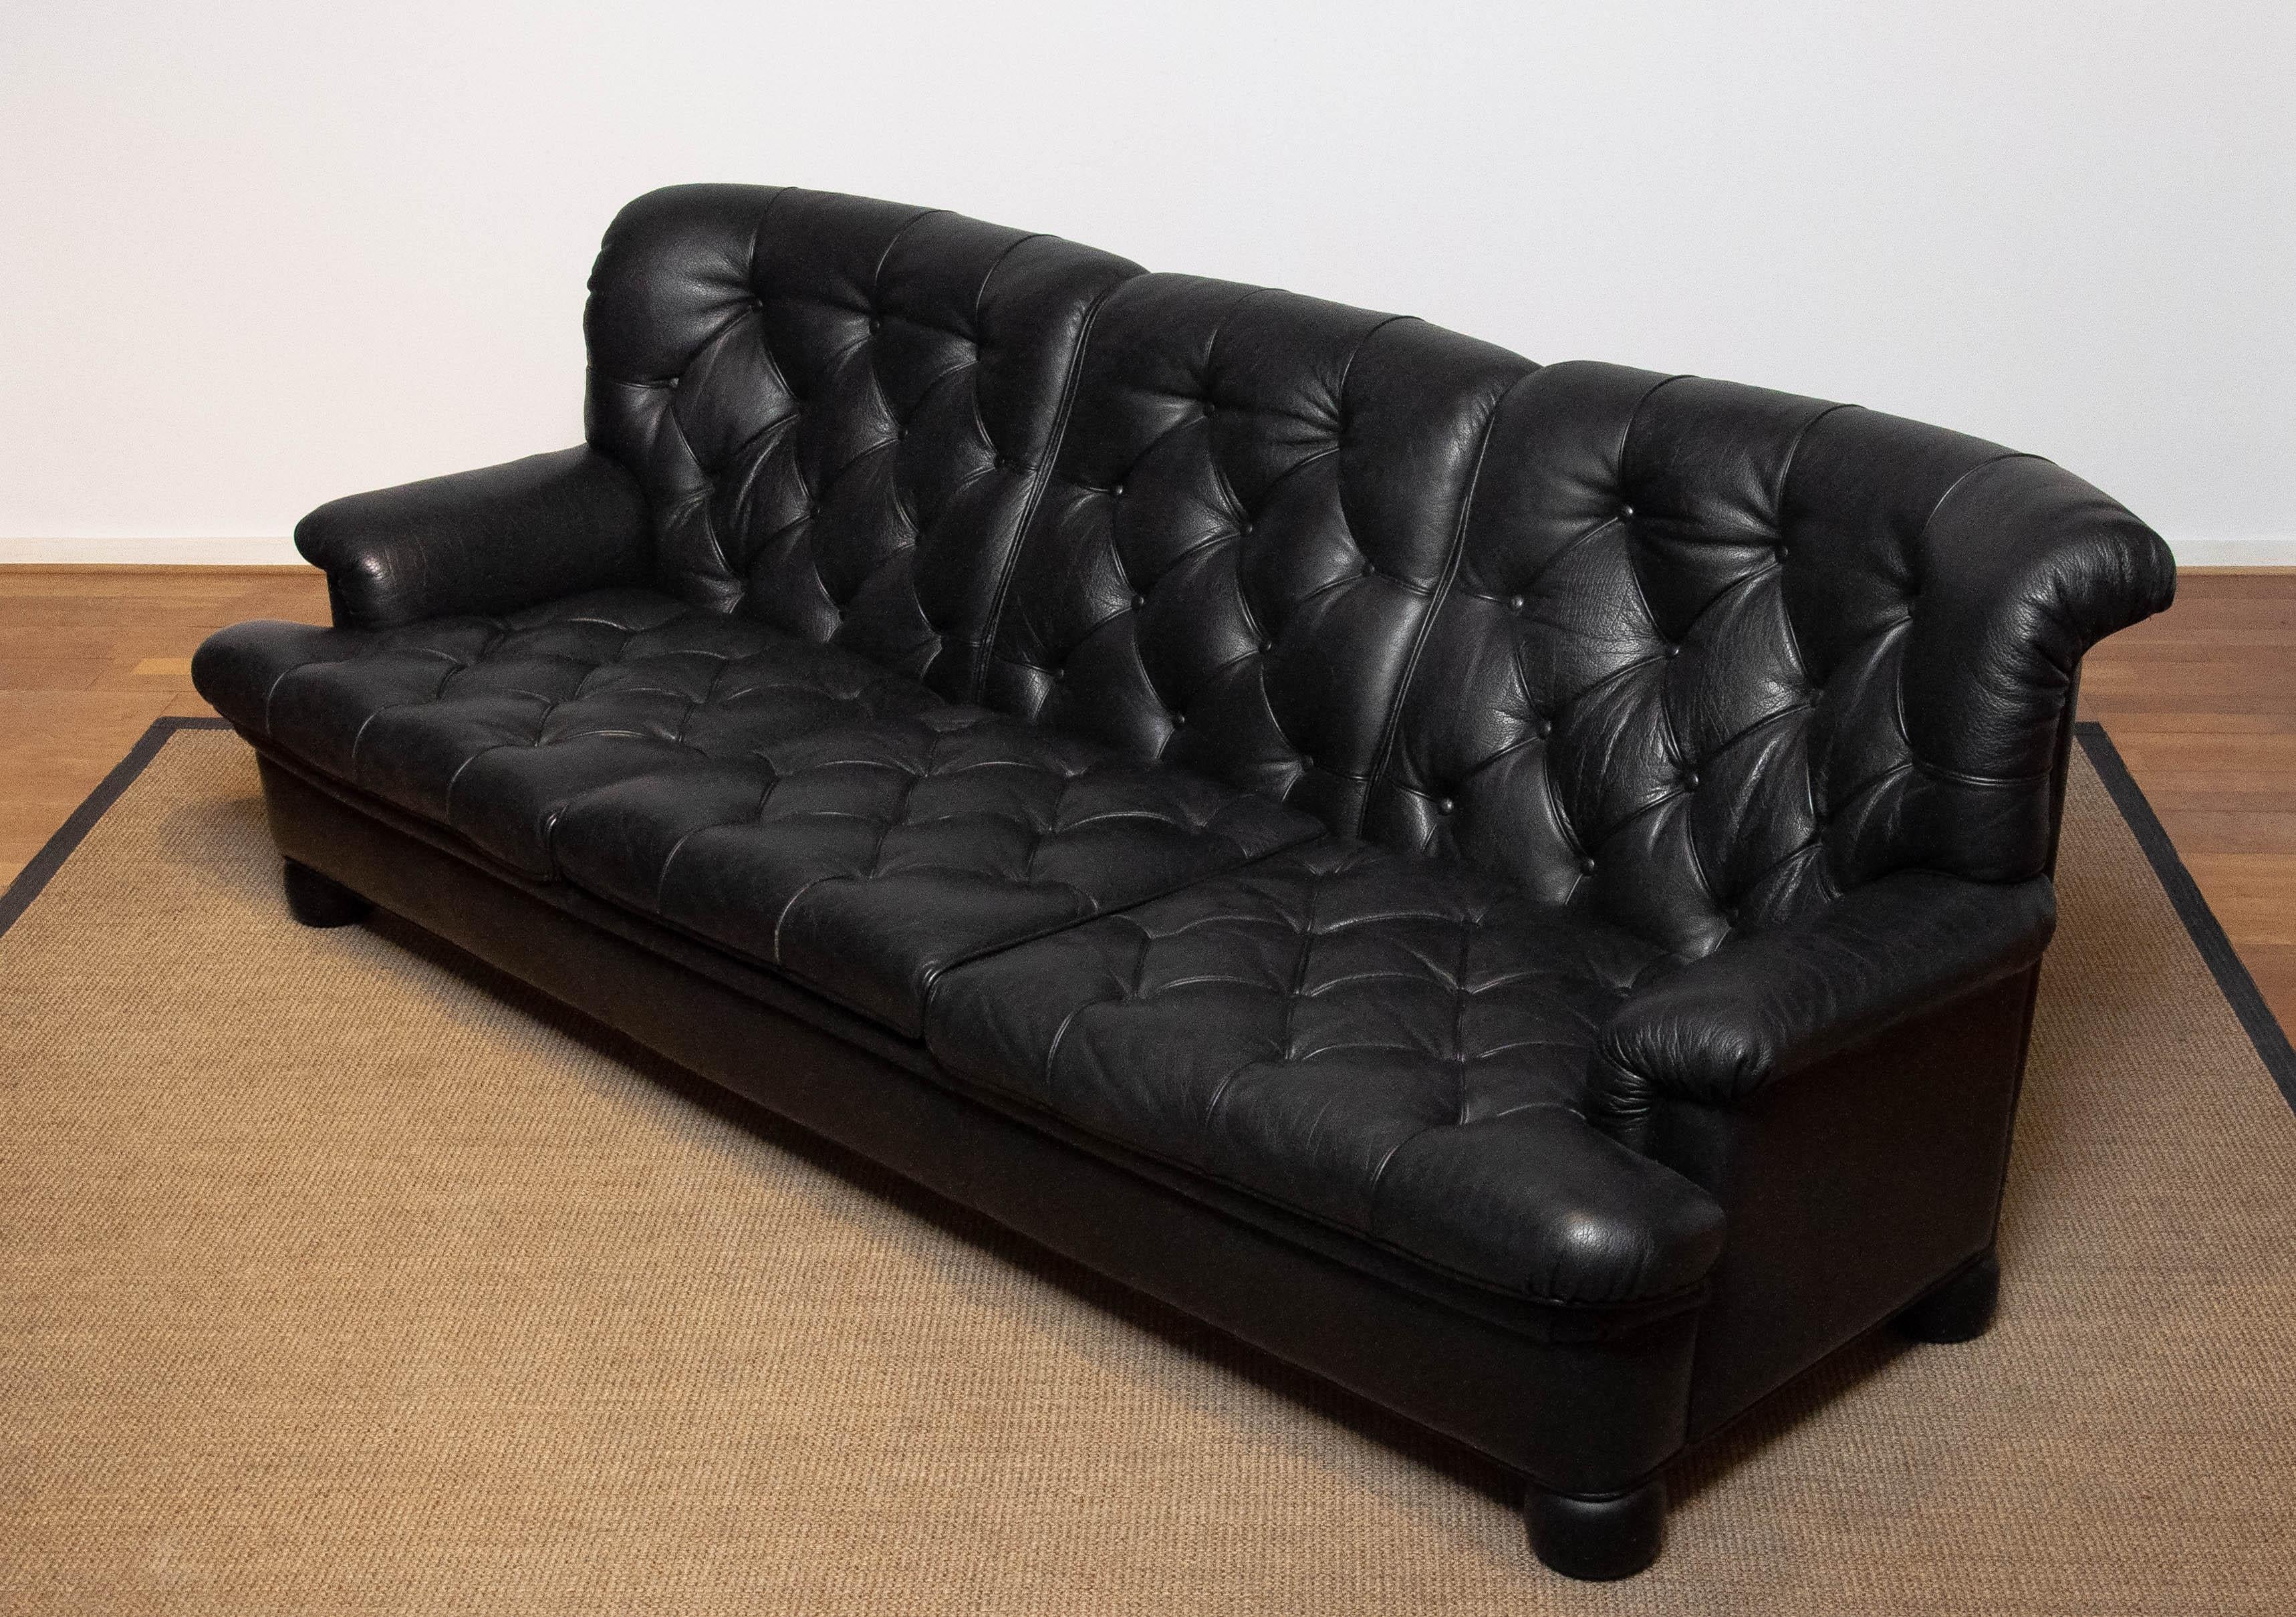 Jupiter Sofa - 7 For Sale on 1stDibs | finn juhl jupiter sofa